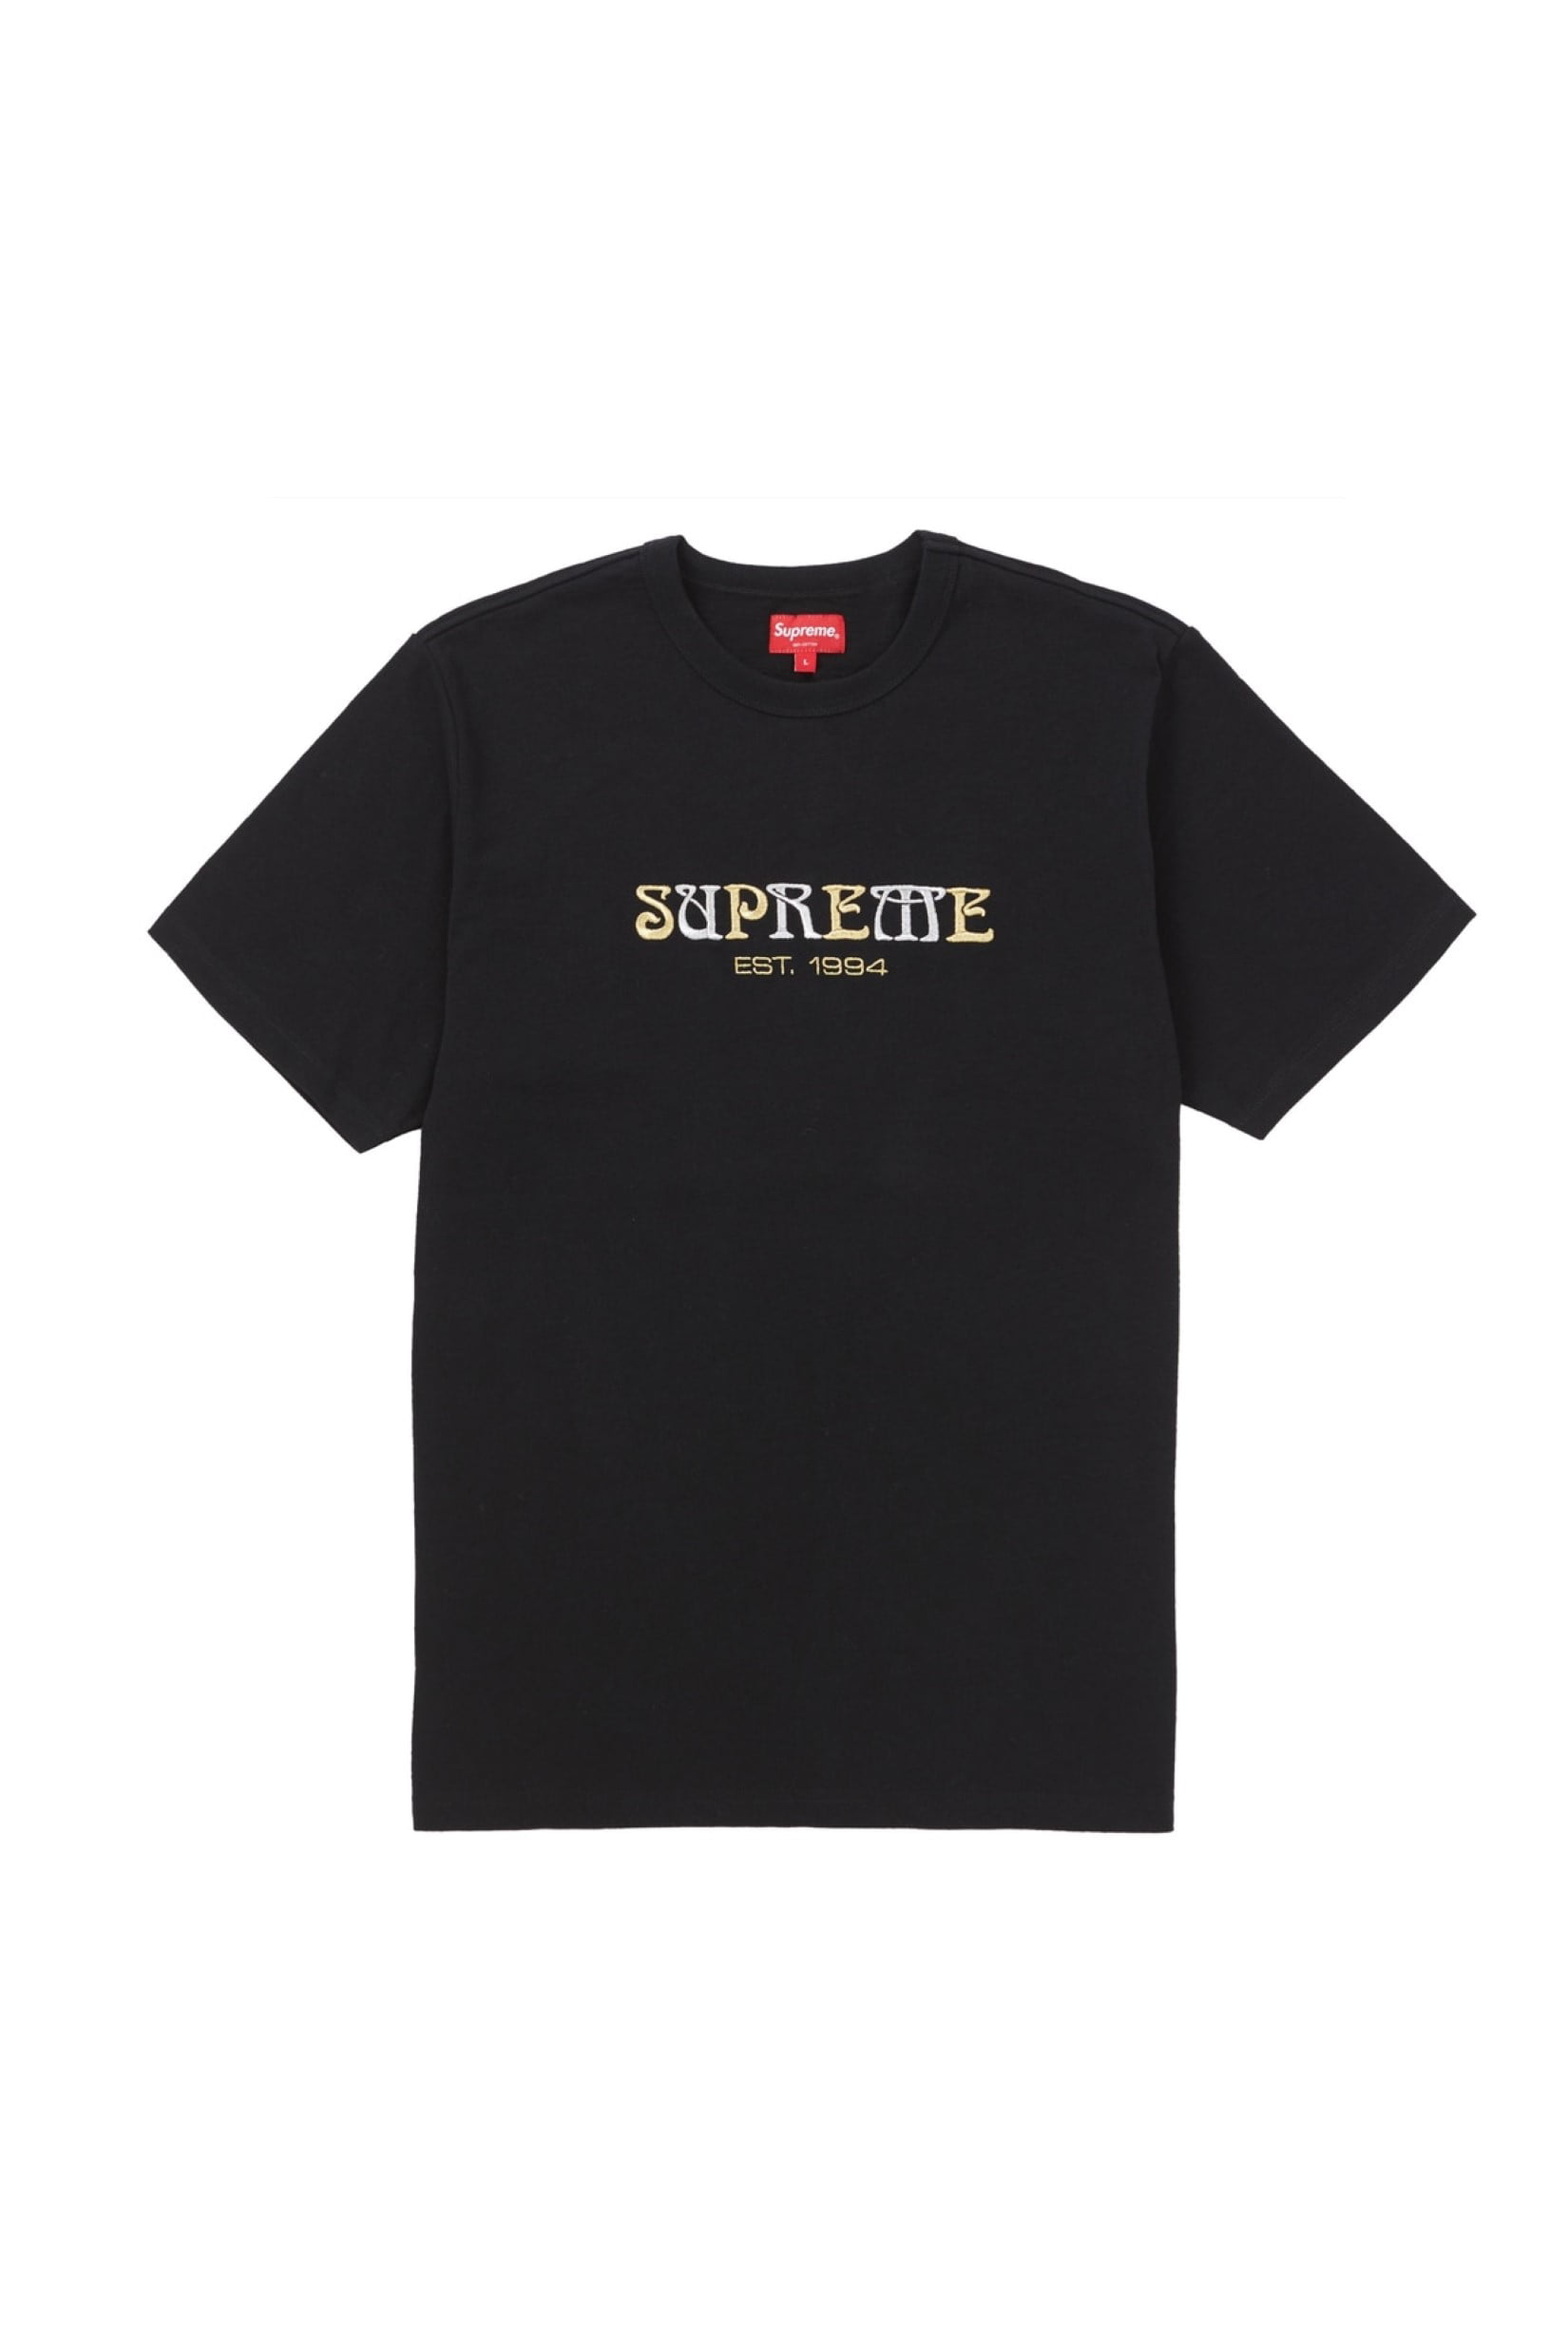 Supreme - Supreme Nouveau Logo Tee Black - Size Medium - Walmart.com